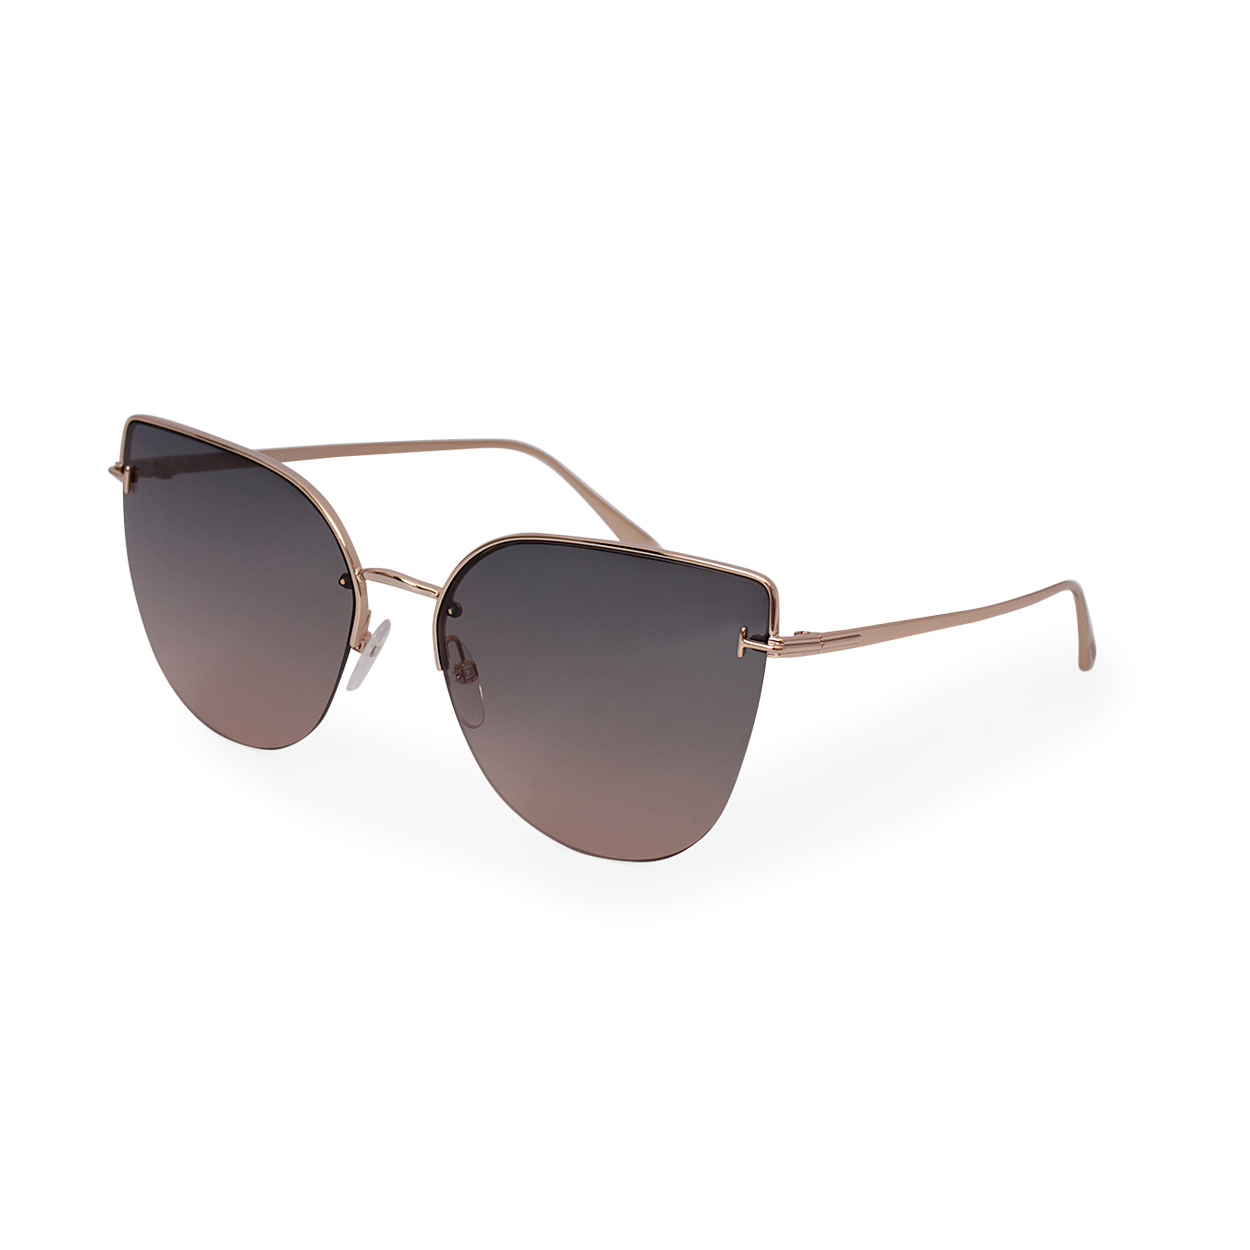 TOM FORD Ingrid 02 Sunglasses TF652 28B Gold/Black - NEW | Luxity